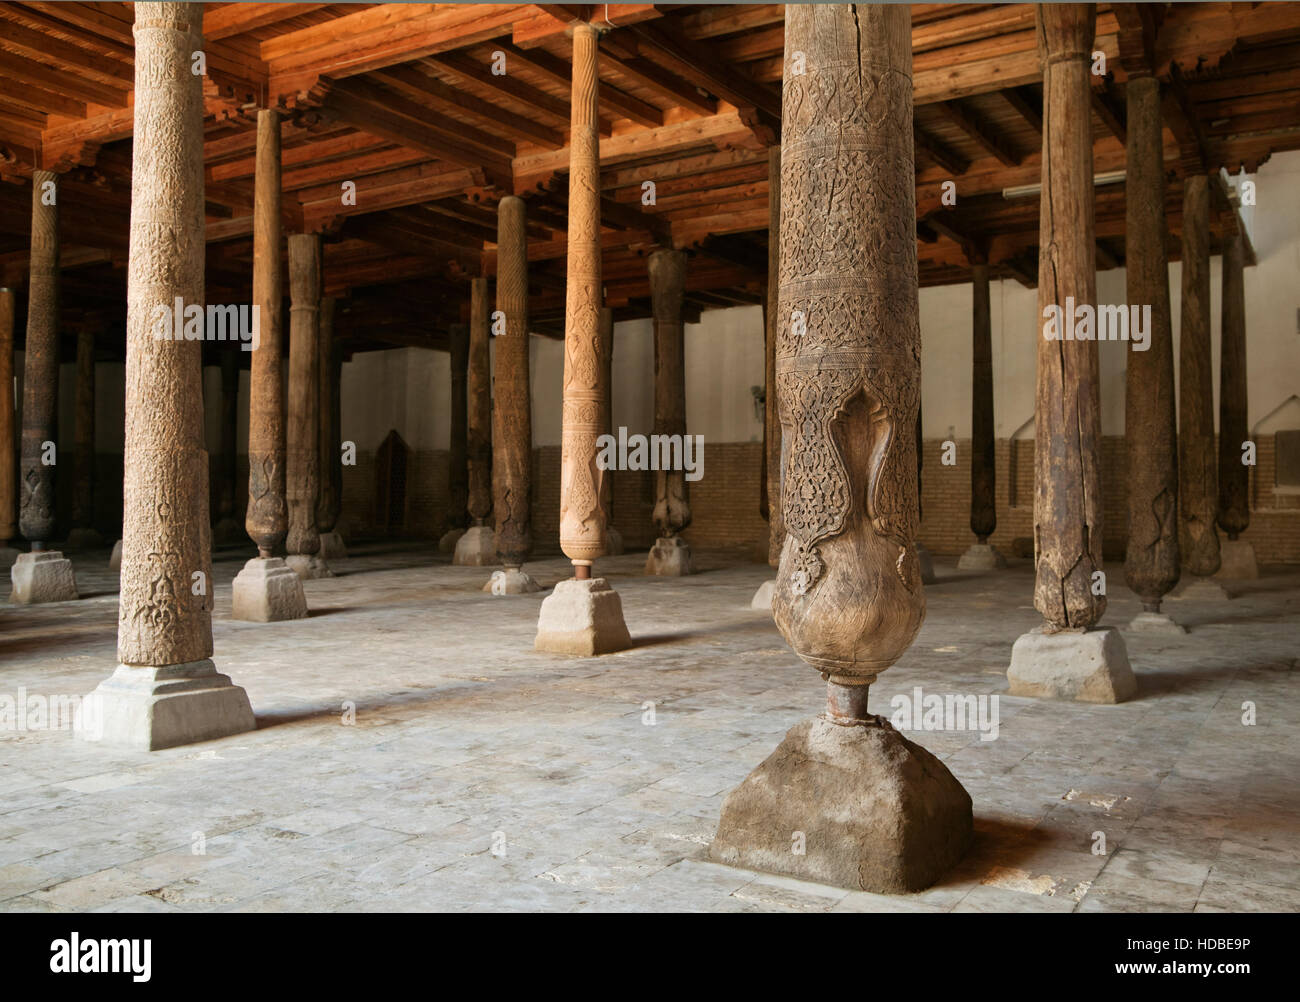 Friday - Djuma - mosque with wooden columns, Khiva, Uzbekistan Stock Photo